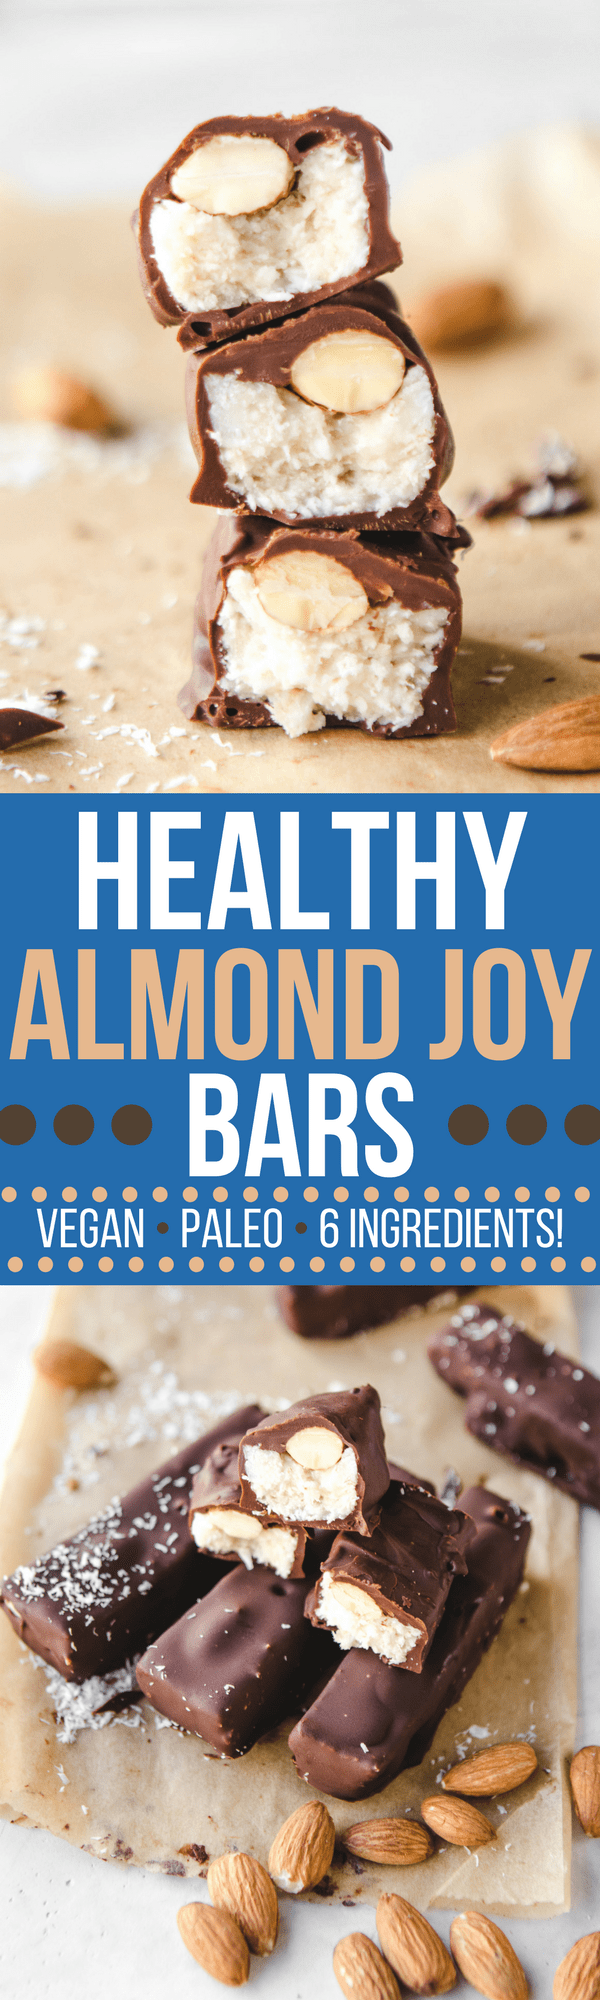 pinterest image of almond joy bars